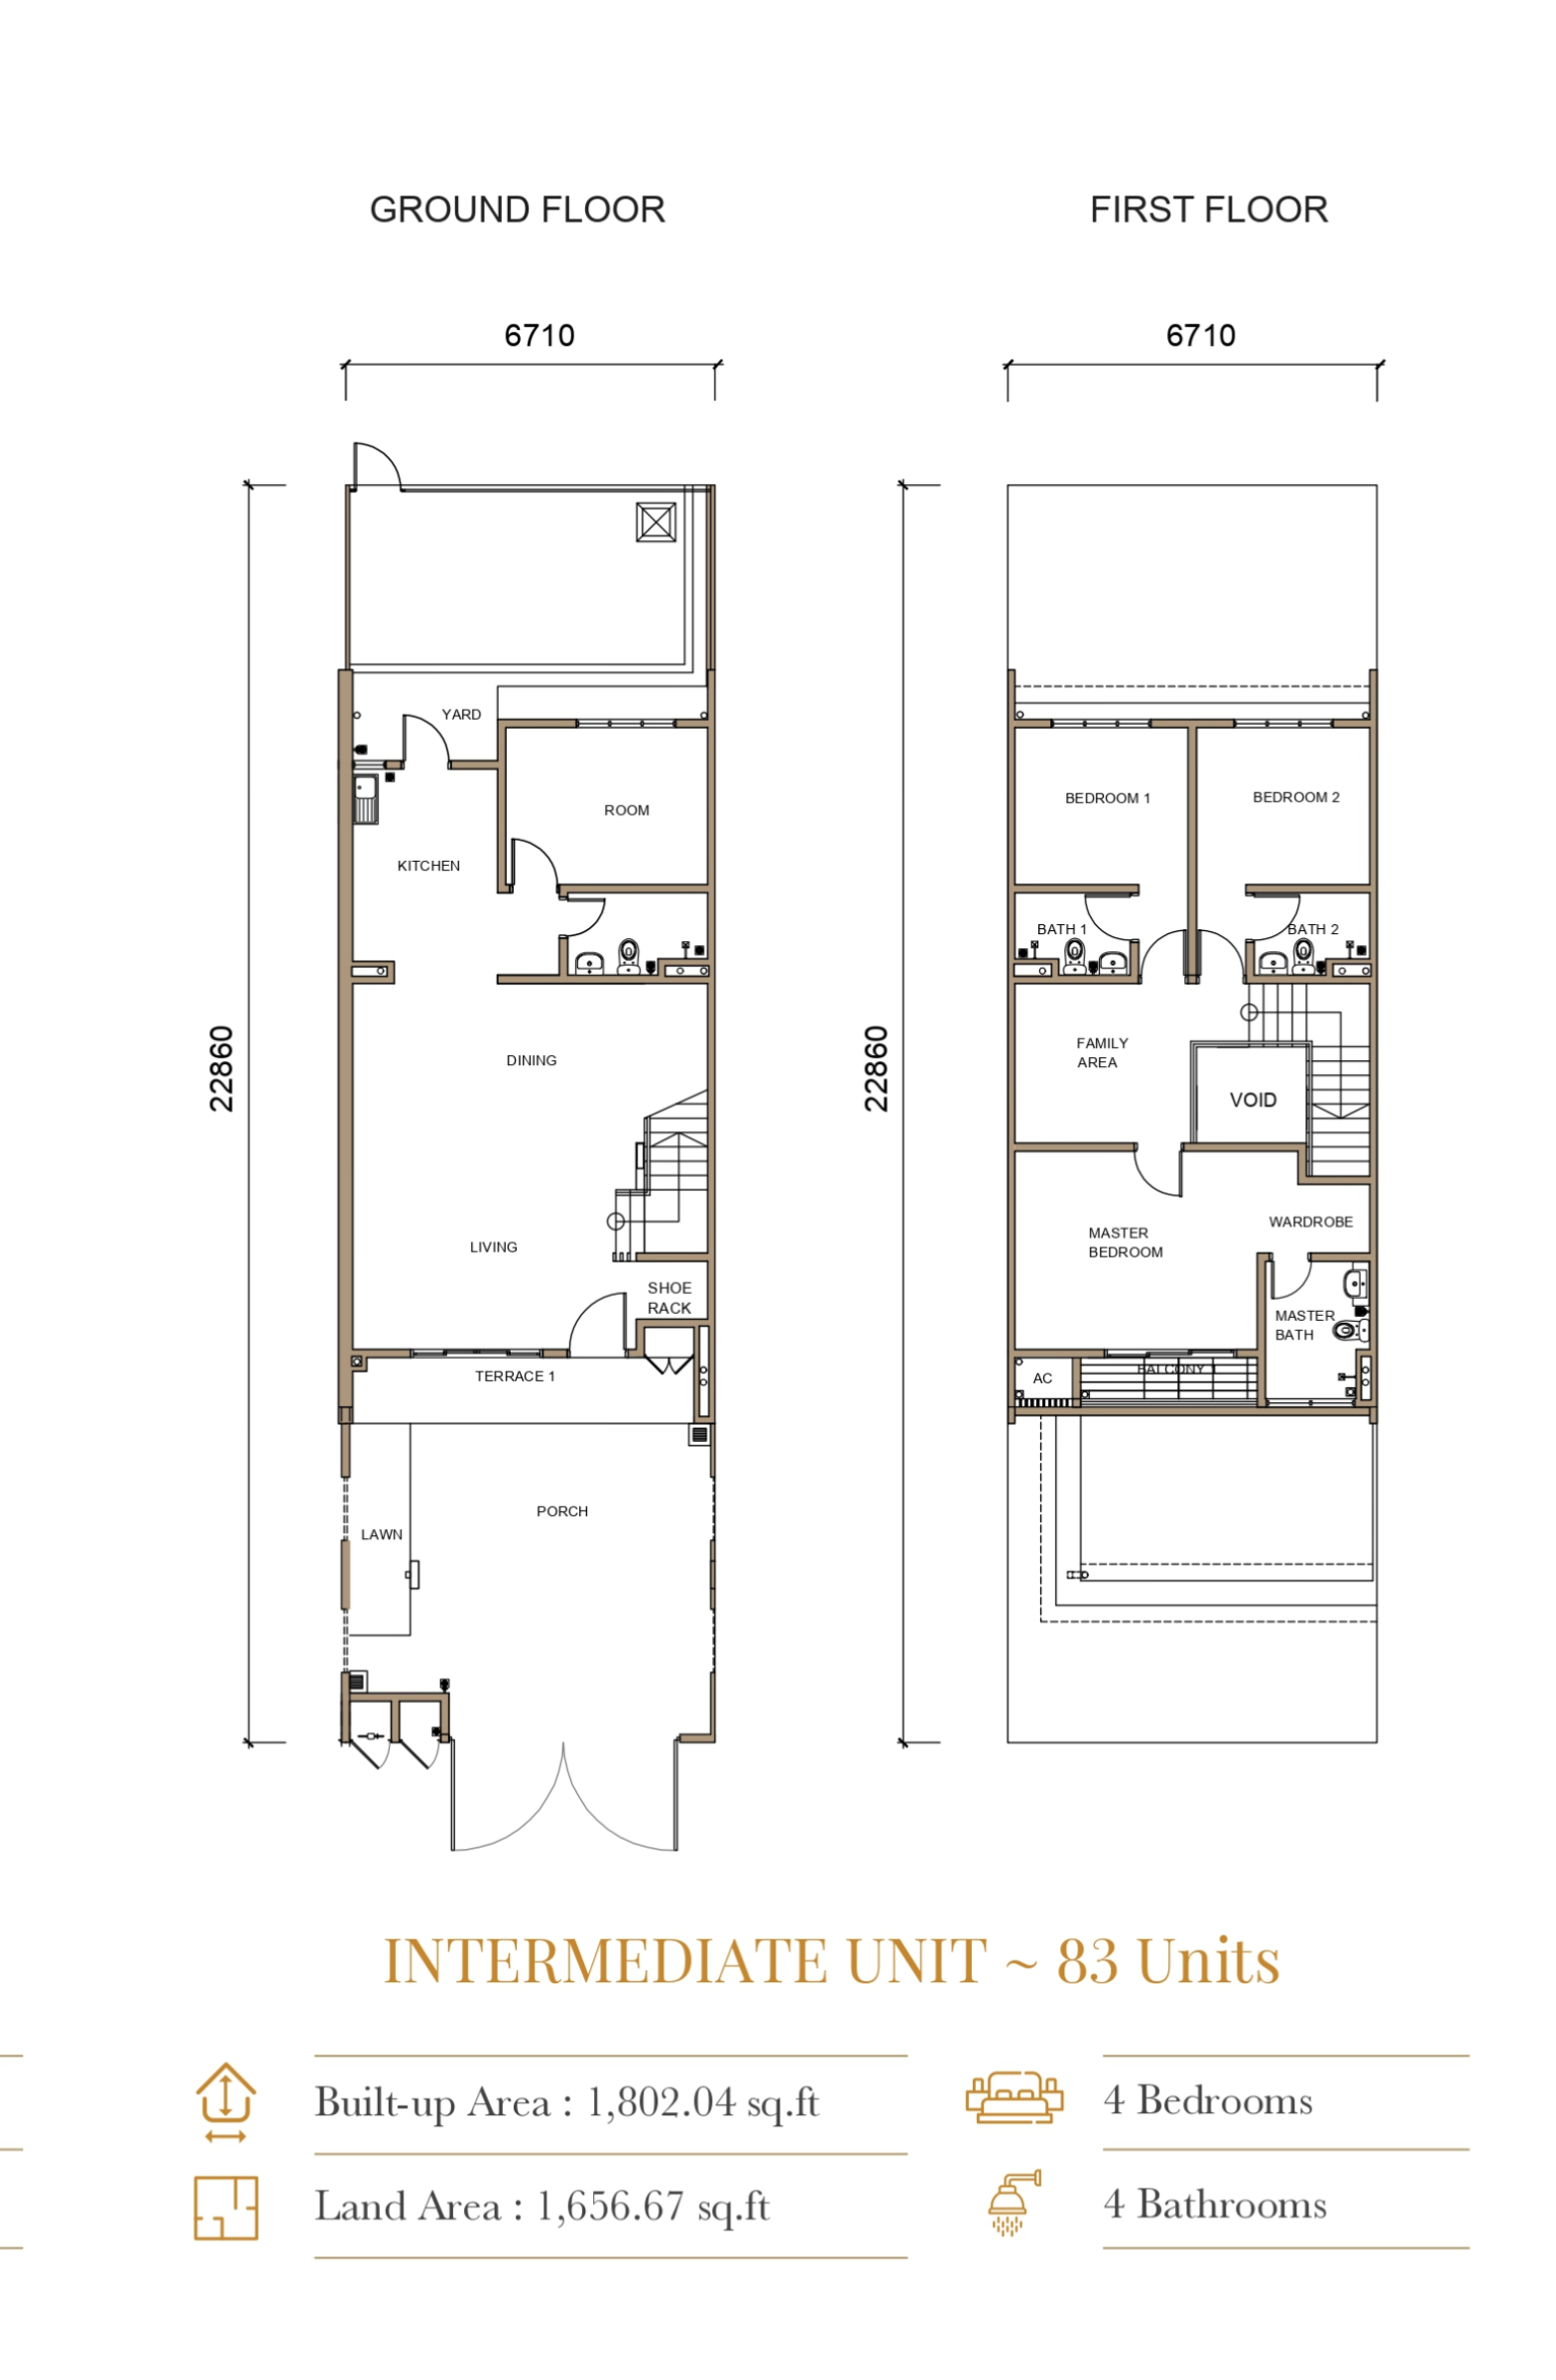 adenia floor plan intermediate unit